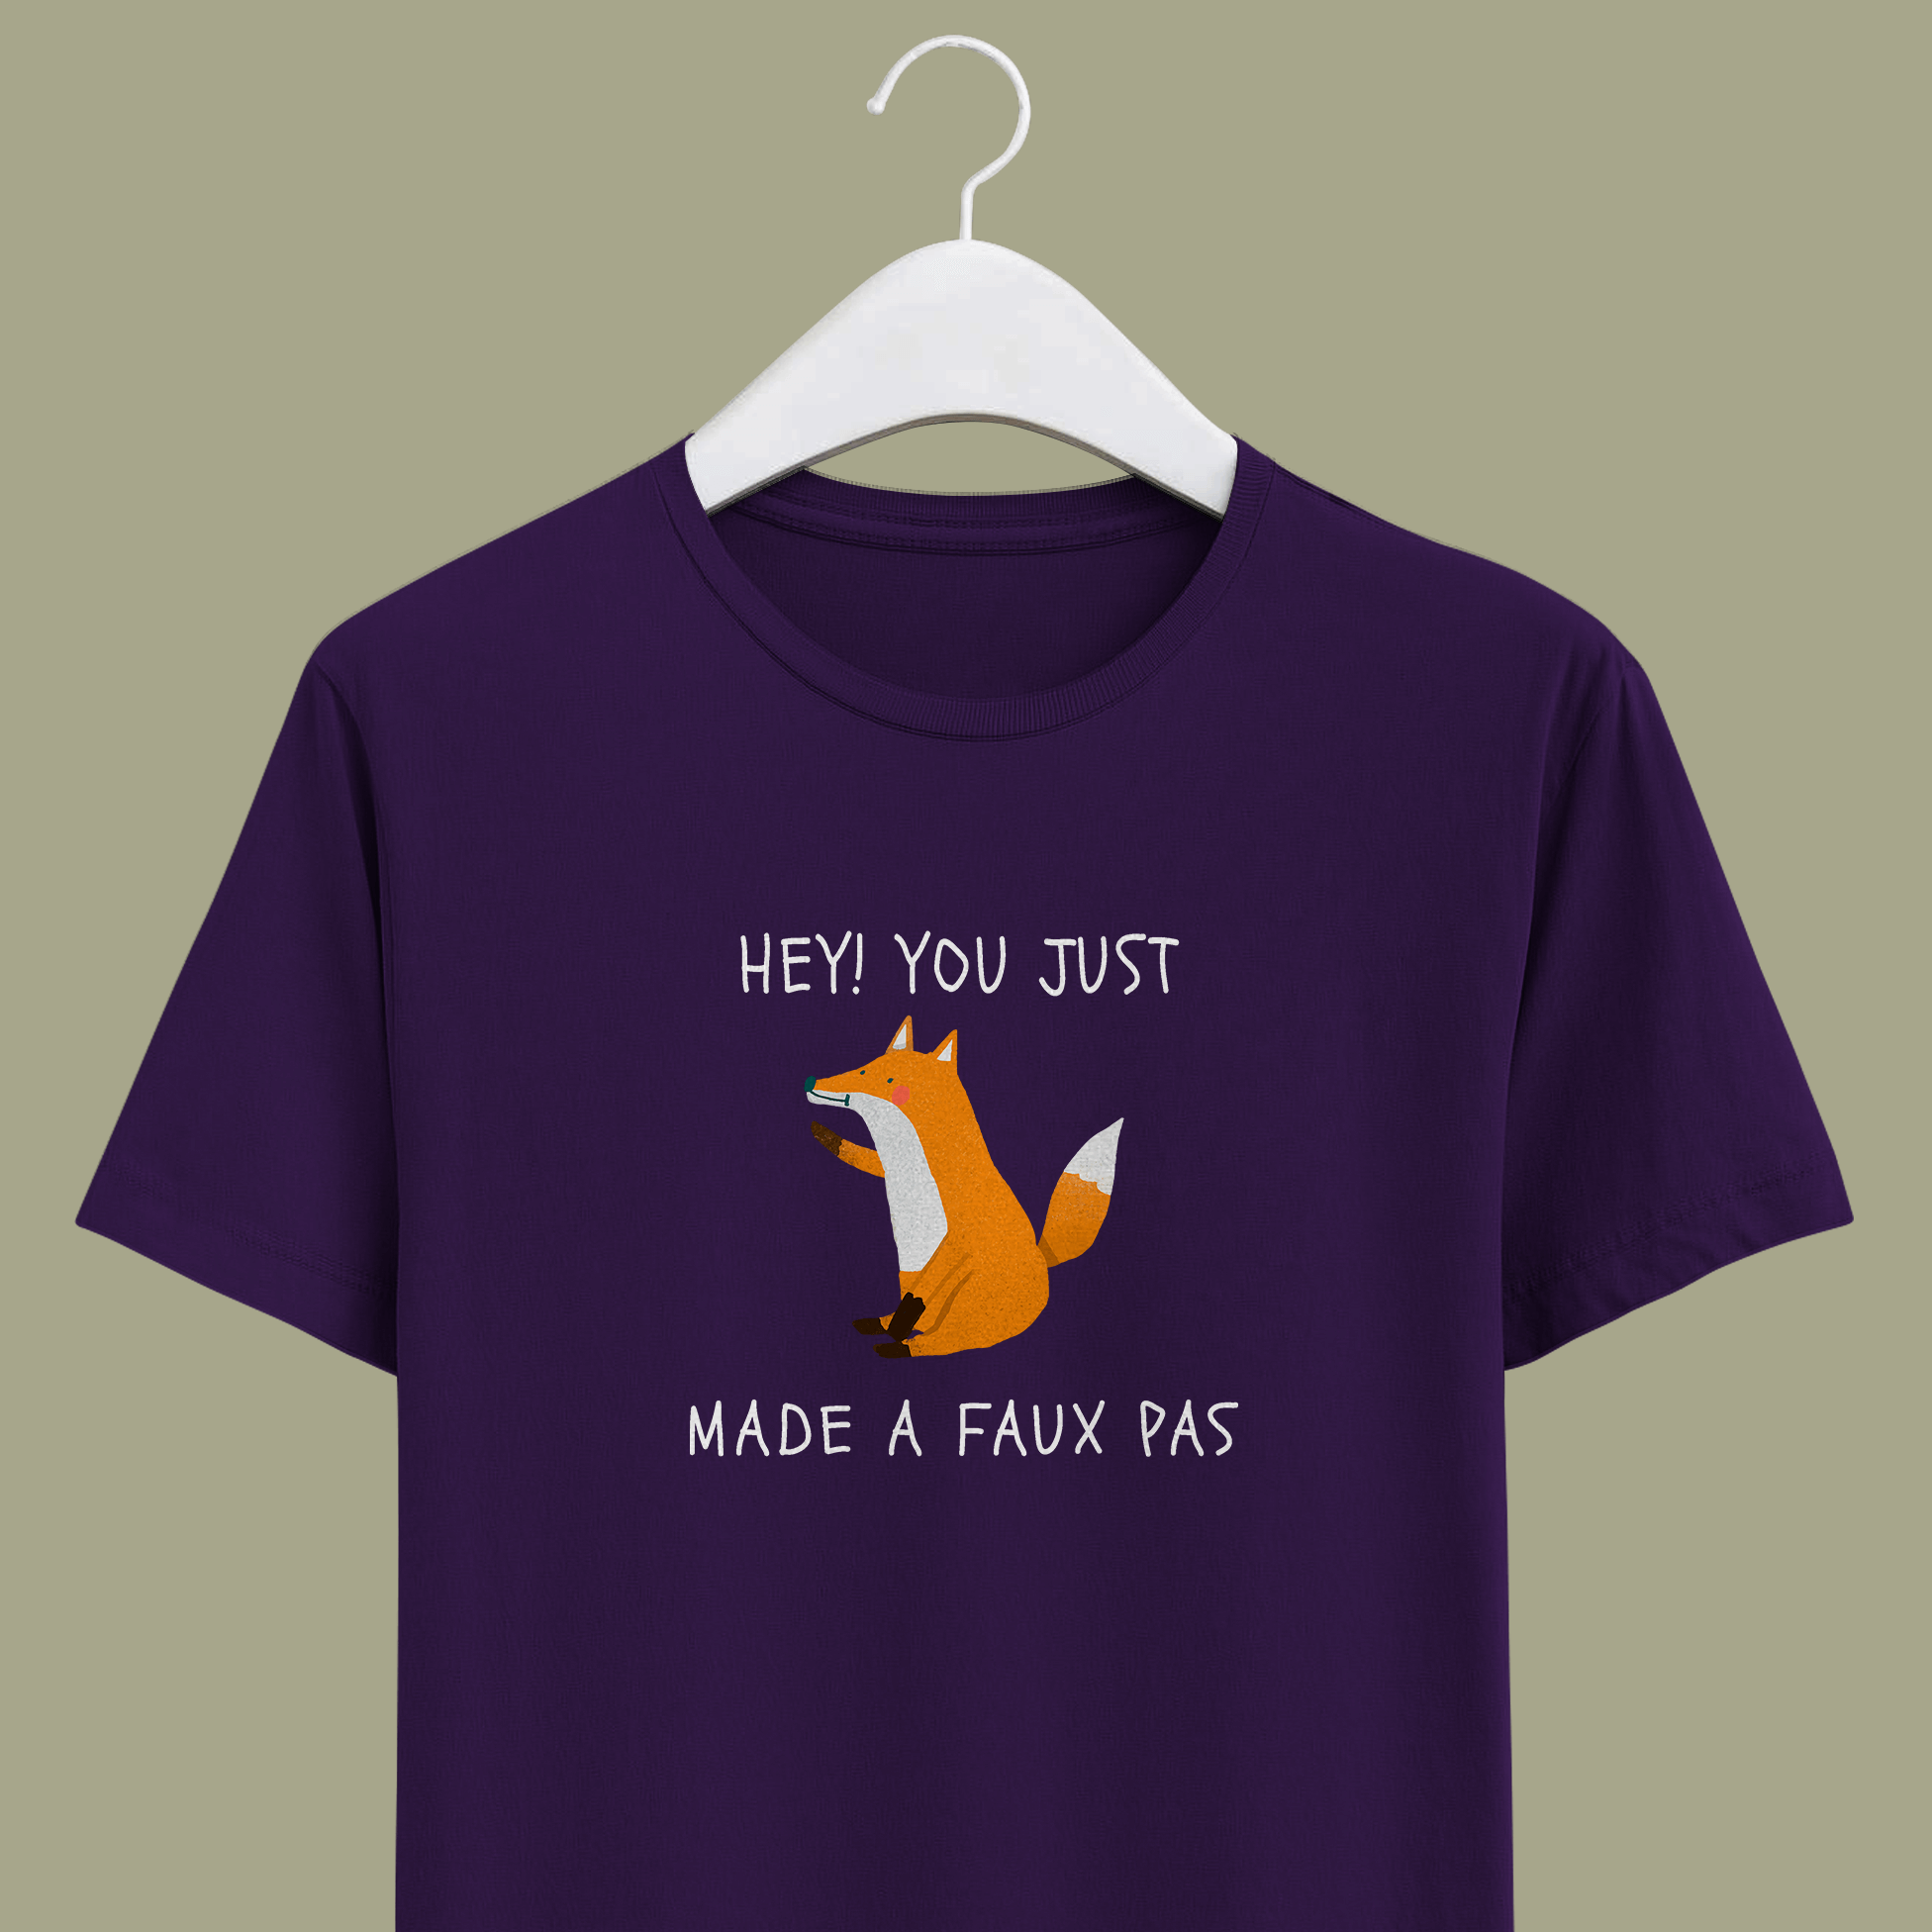 Joke on french word faux pas with orange sitting fox on purple cotton unisex t-shirt.